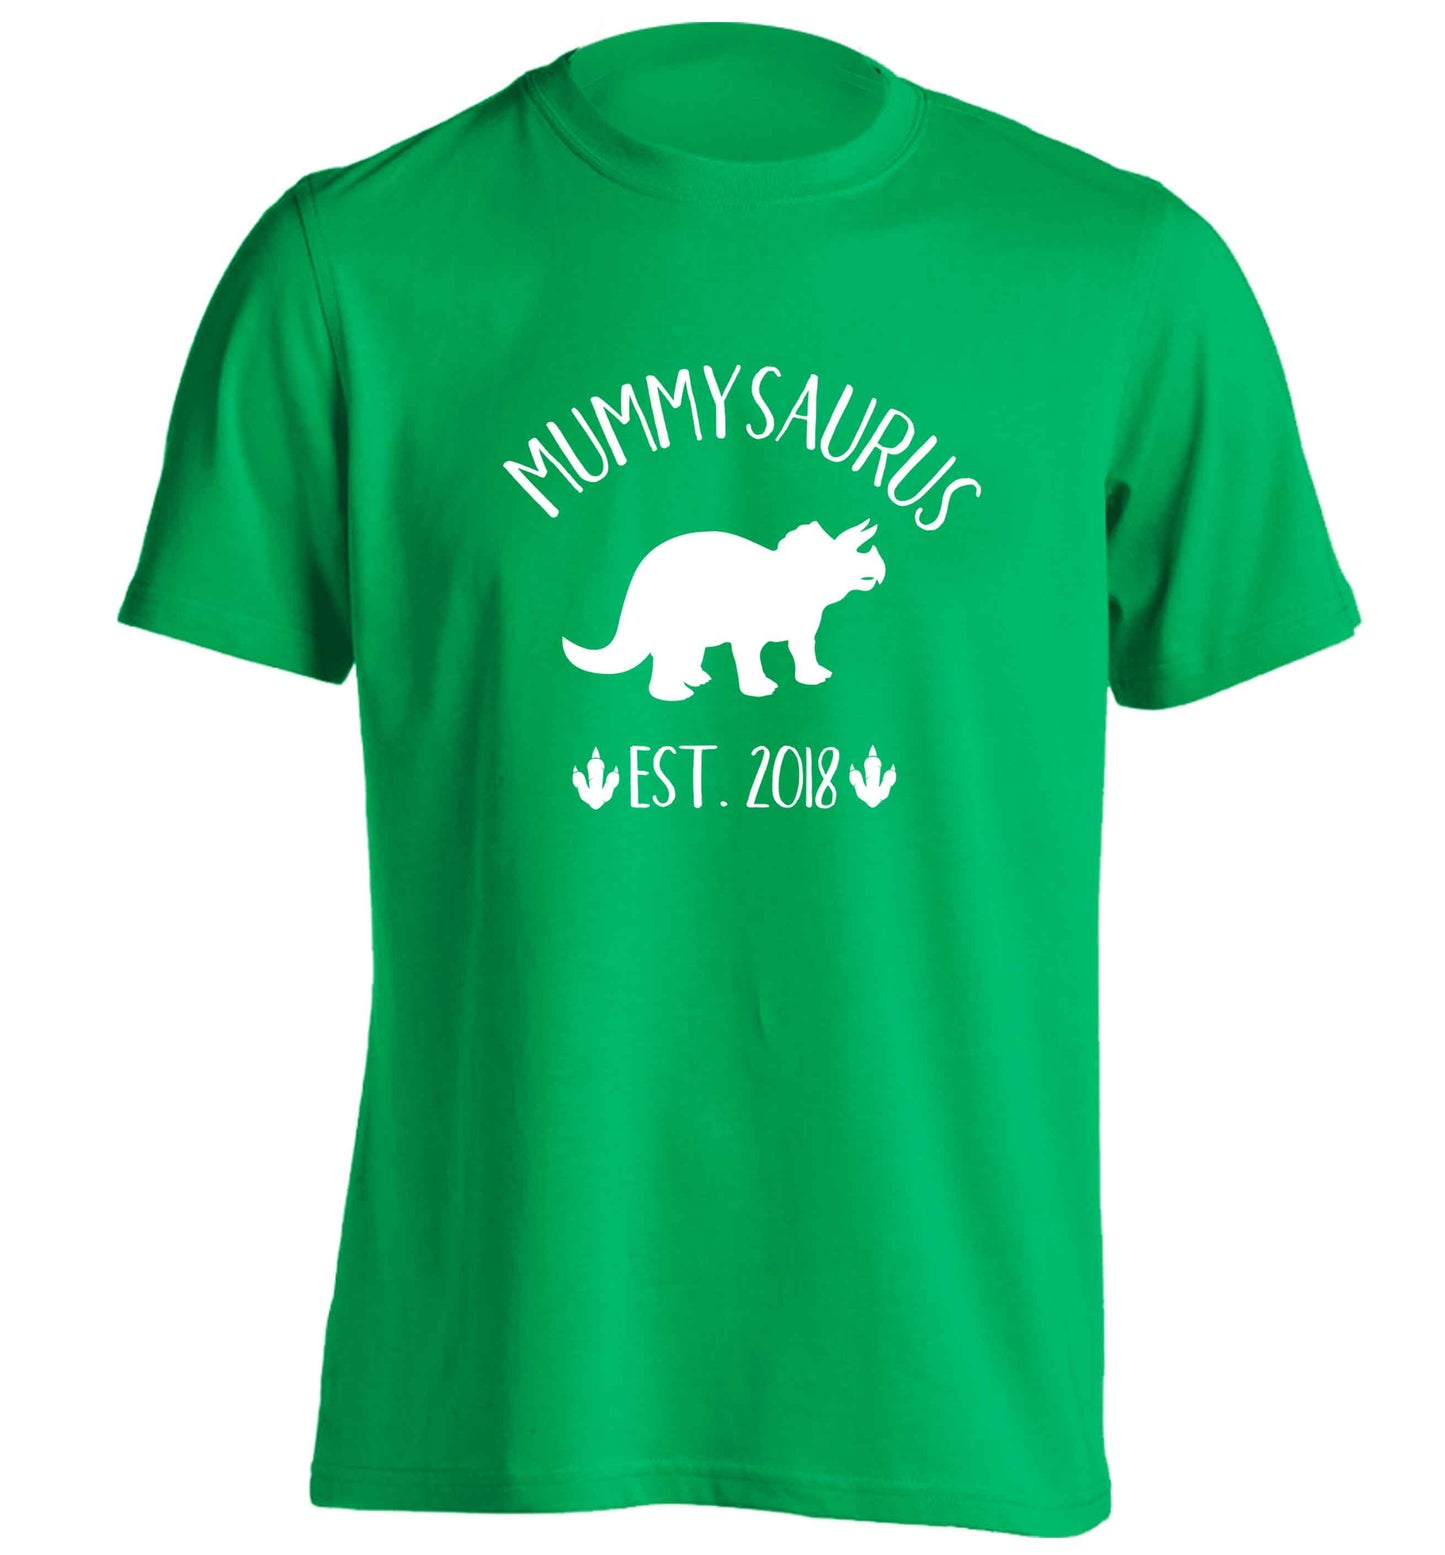 Personalised mummysaurus date adults unisex green Tshirt small